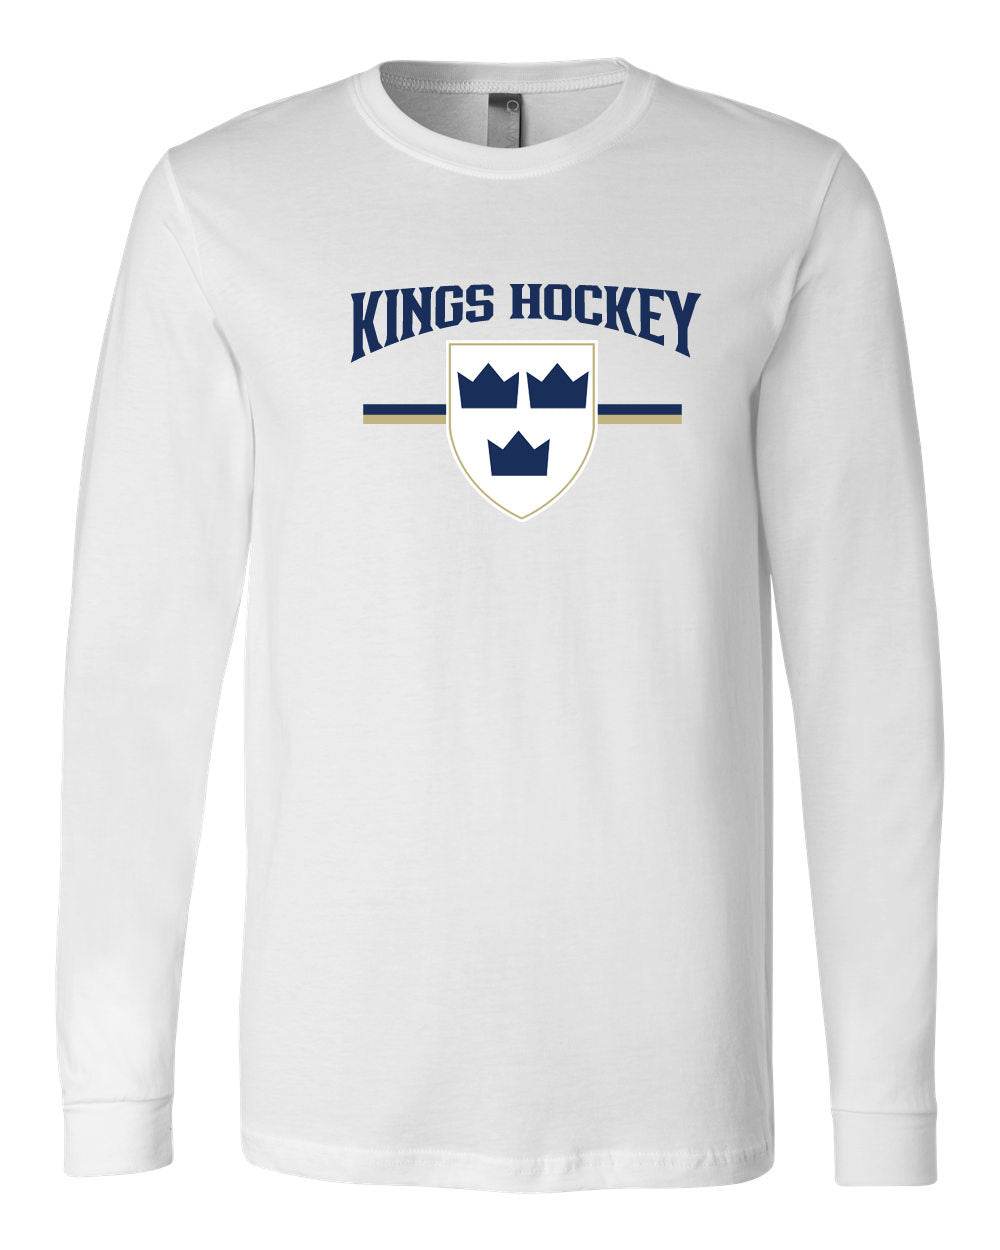 Kings Hockey Design 5 Long Sleeve Shirt